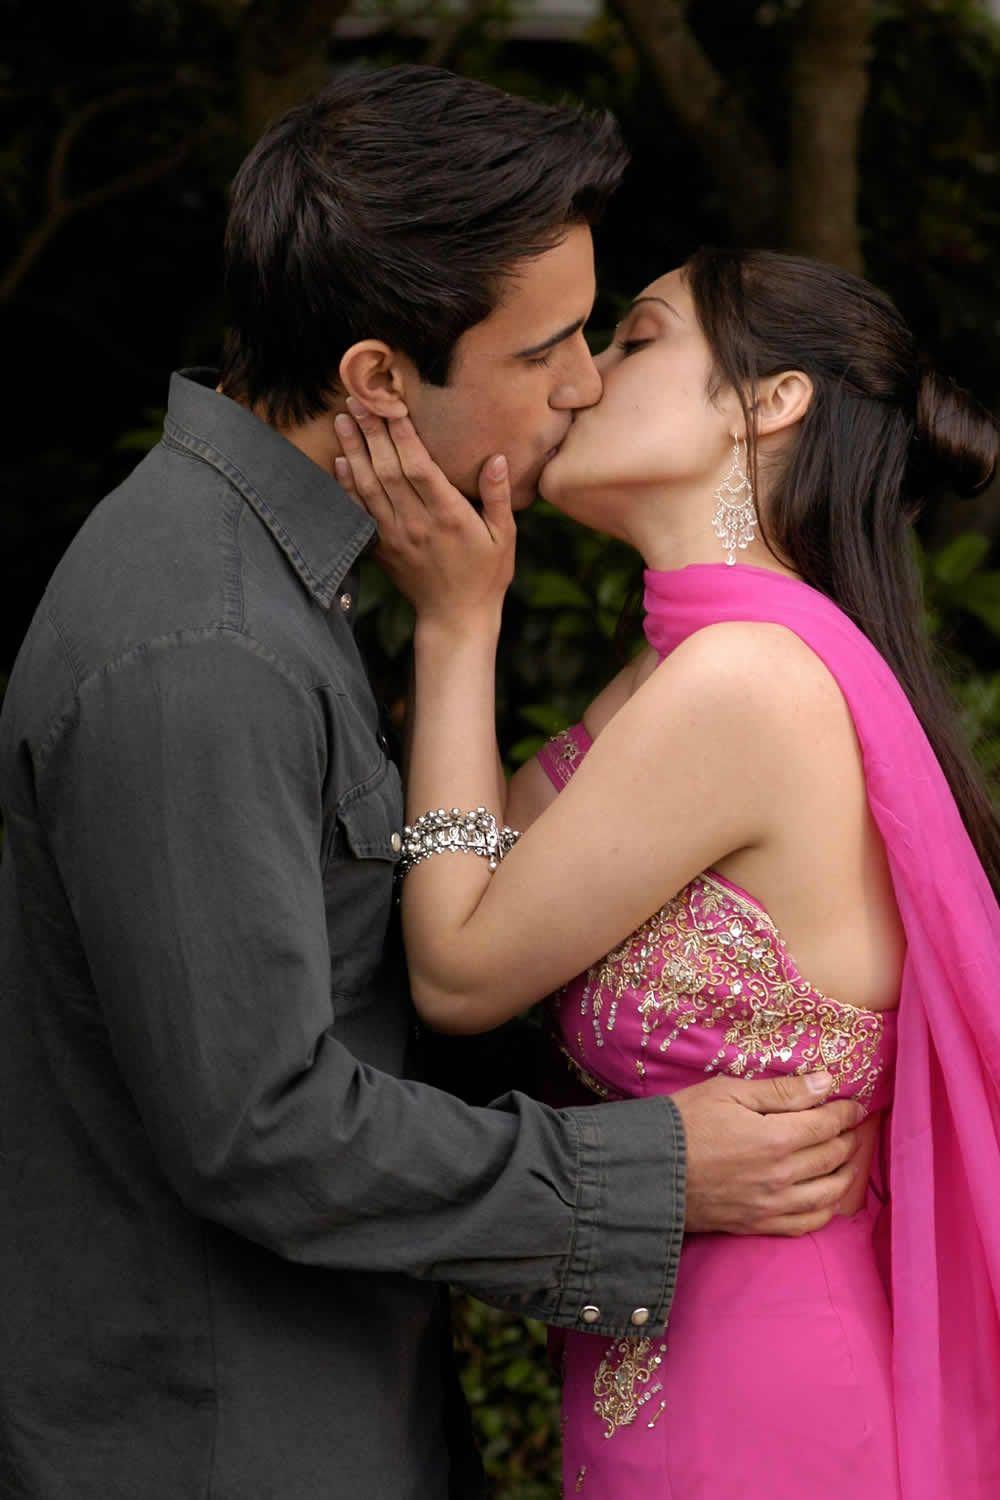 kissing love�. Kiss and romance, Romantic photohoot, Kiss image